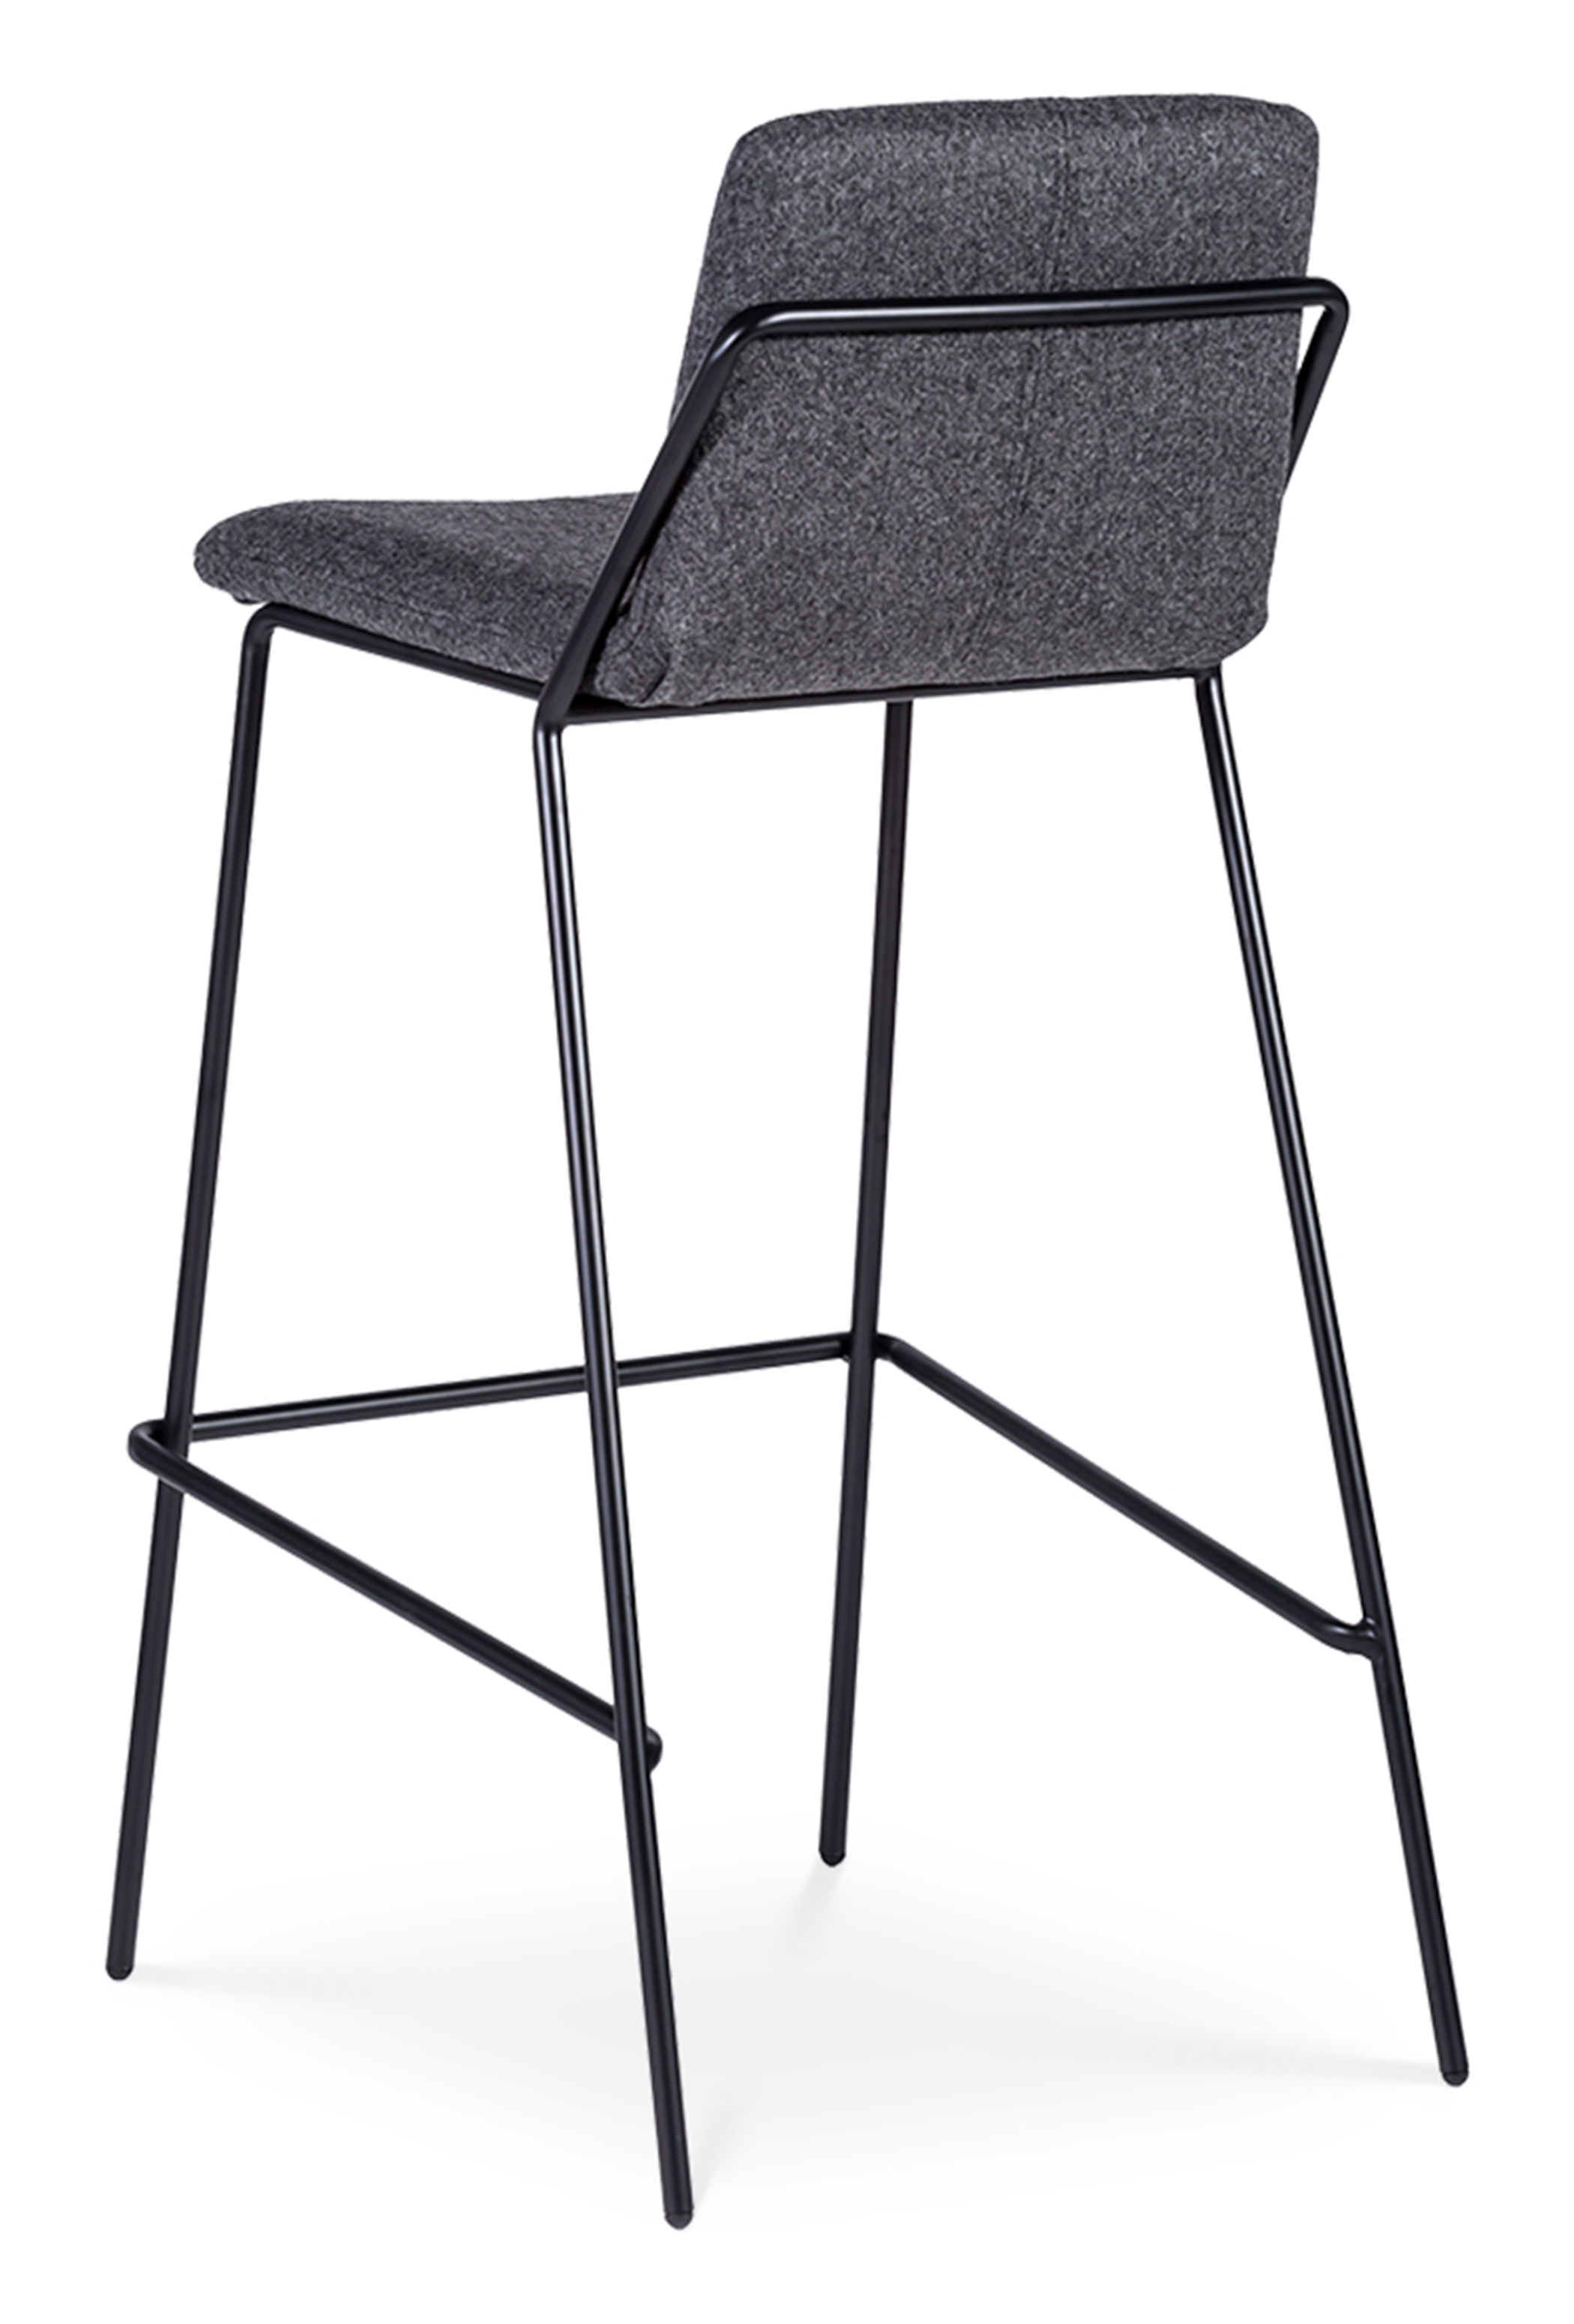 WS - Sling high stool - Upholstered dark grey (Back angle)